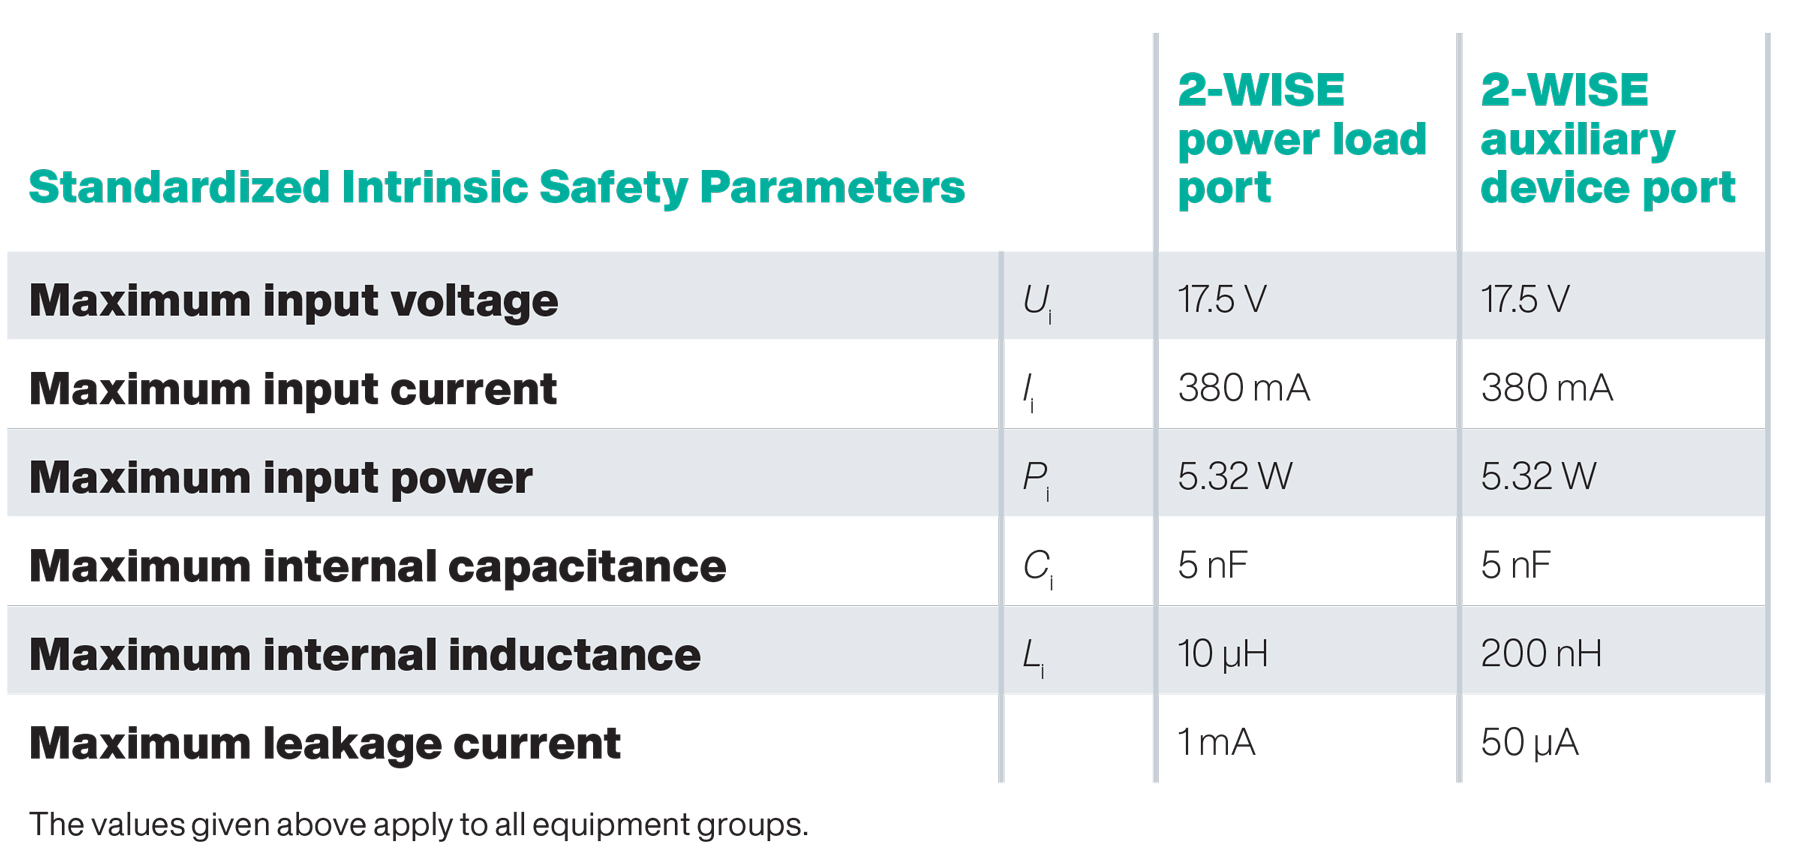 Ethernet-APL standardized intrinsic safety parameters